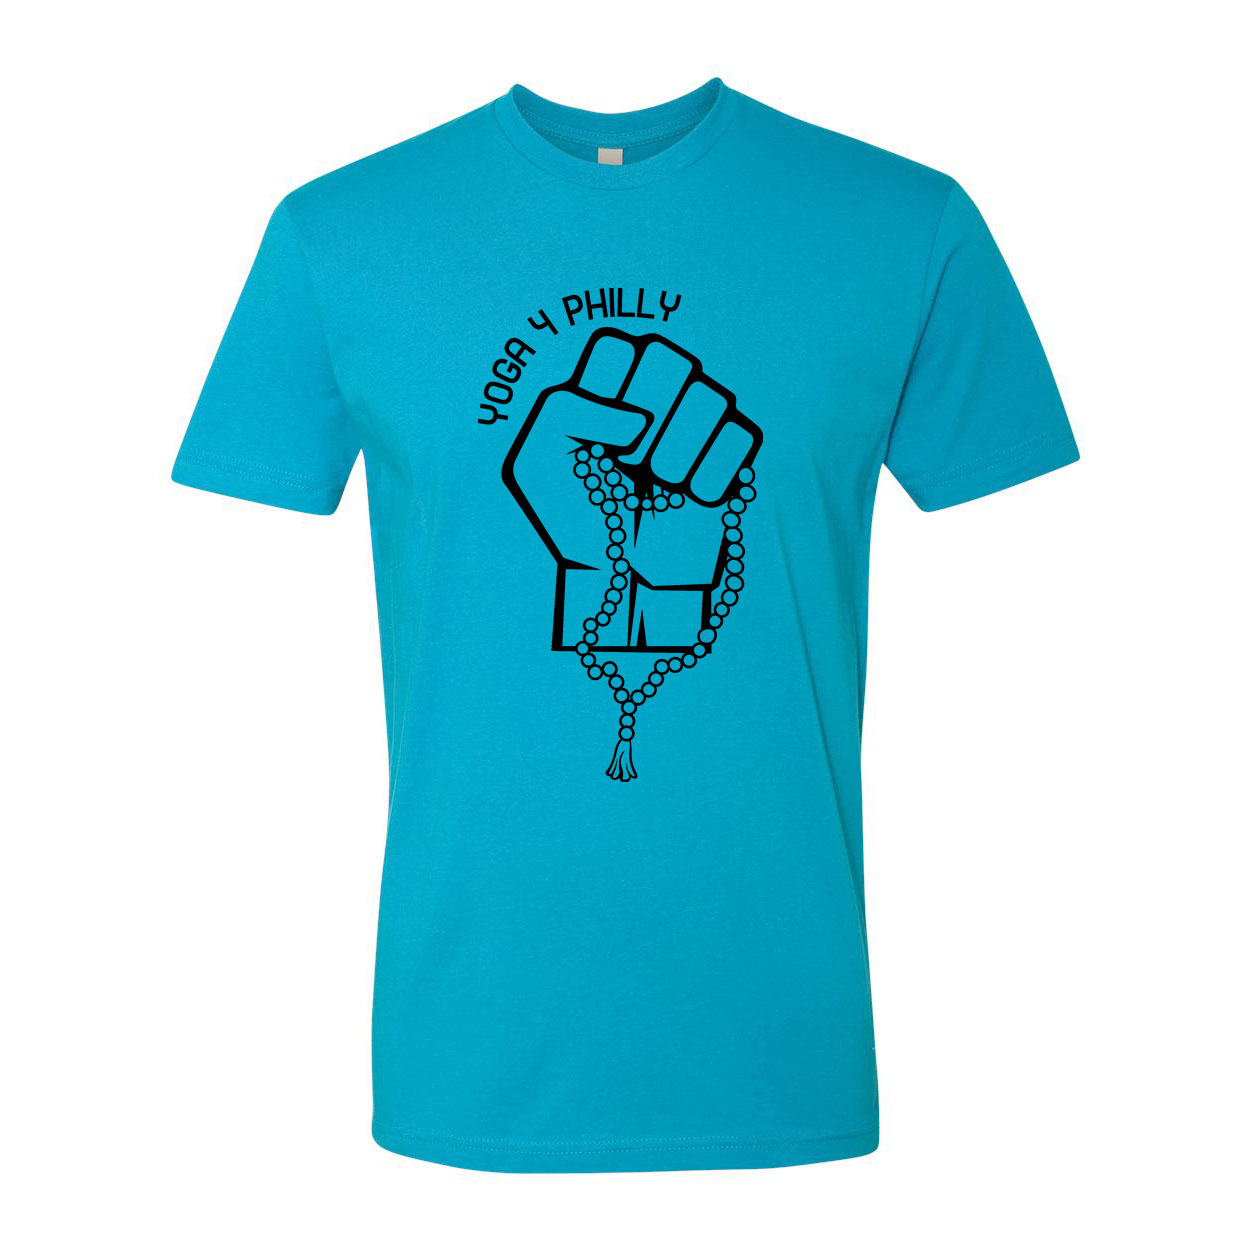 Yoga4Philly Turquoise Next Level T-Shirt